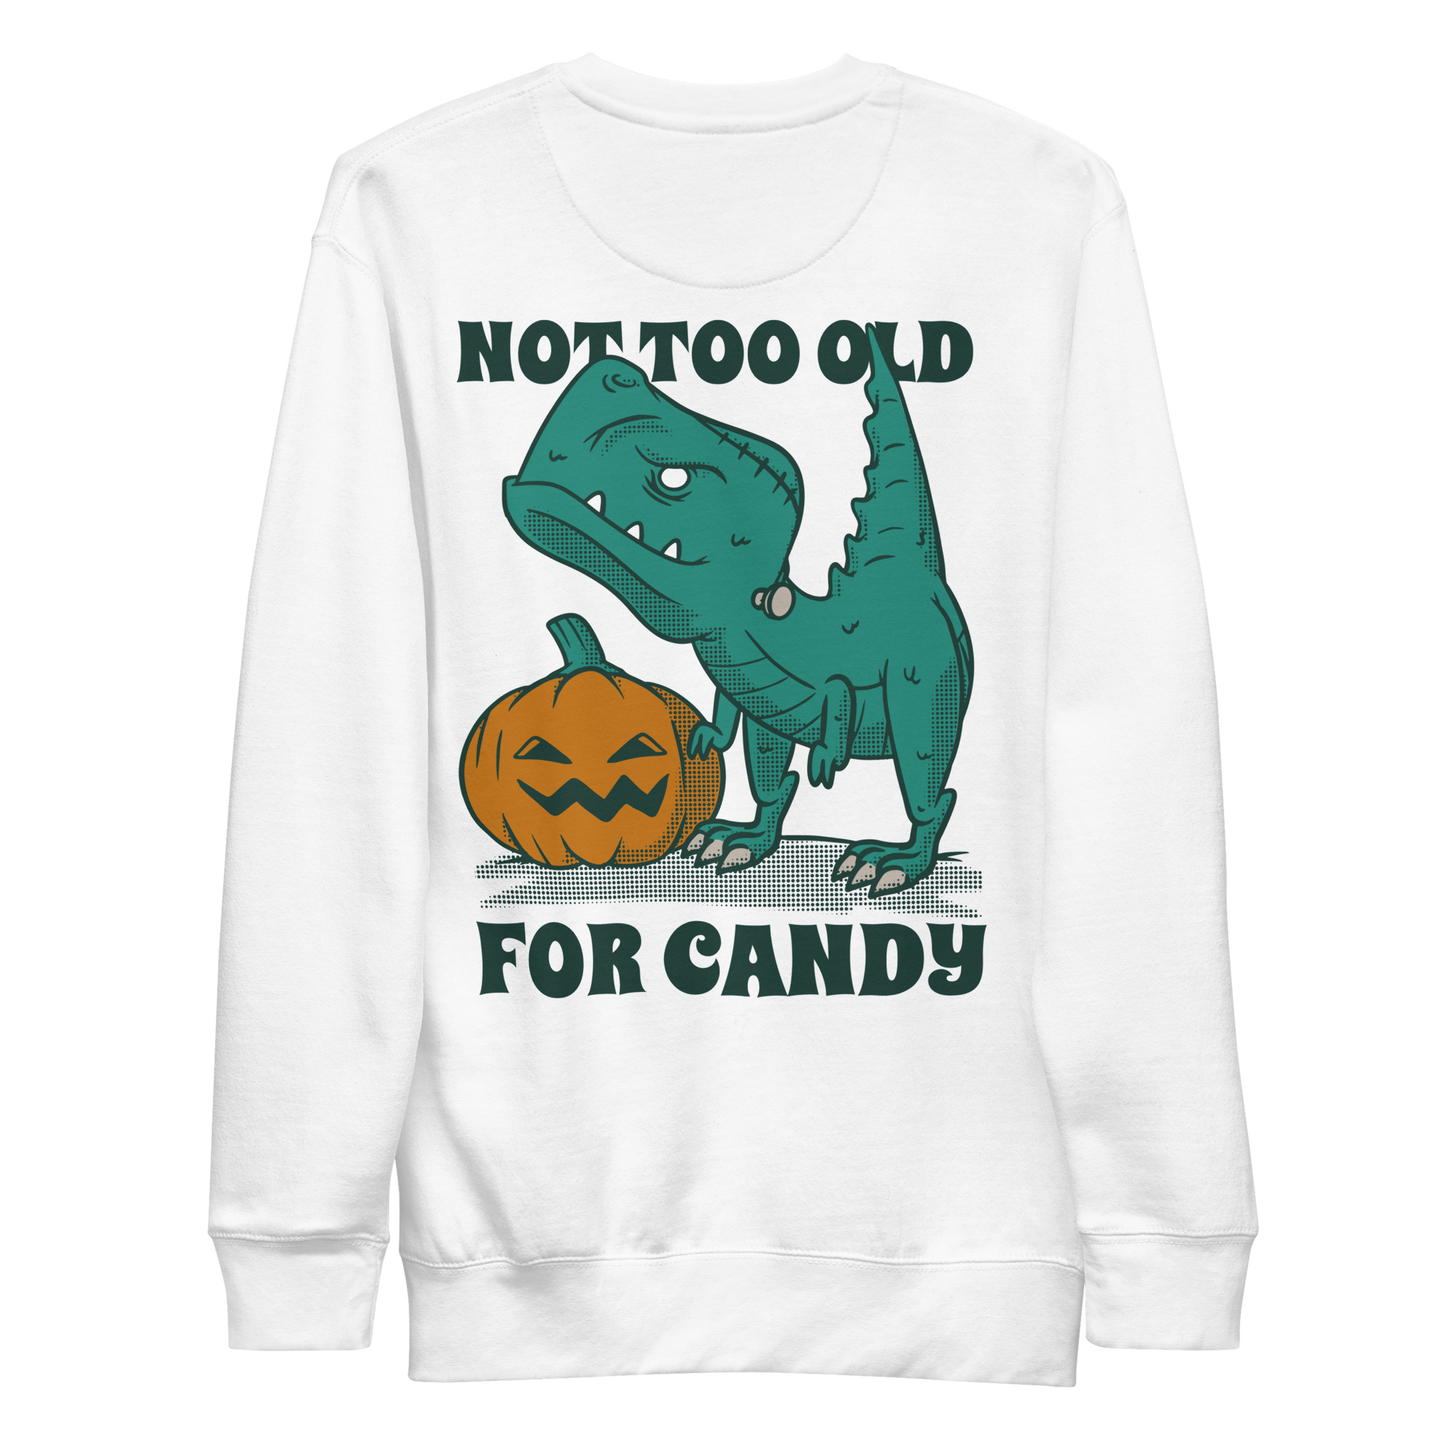 Halloween candy t-rex | Unisex Premium Sweatshirt - F&B